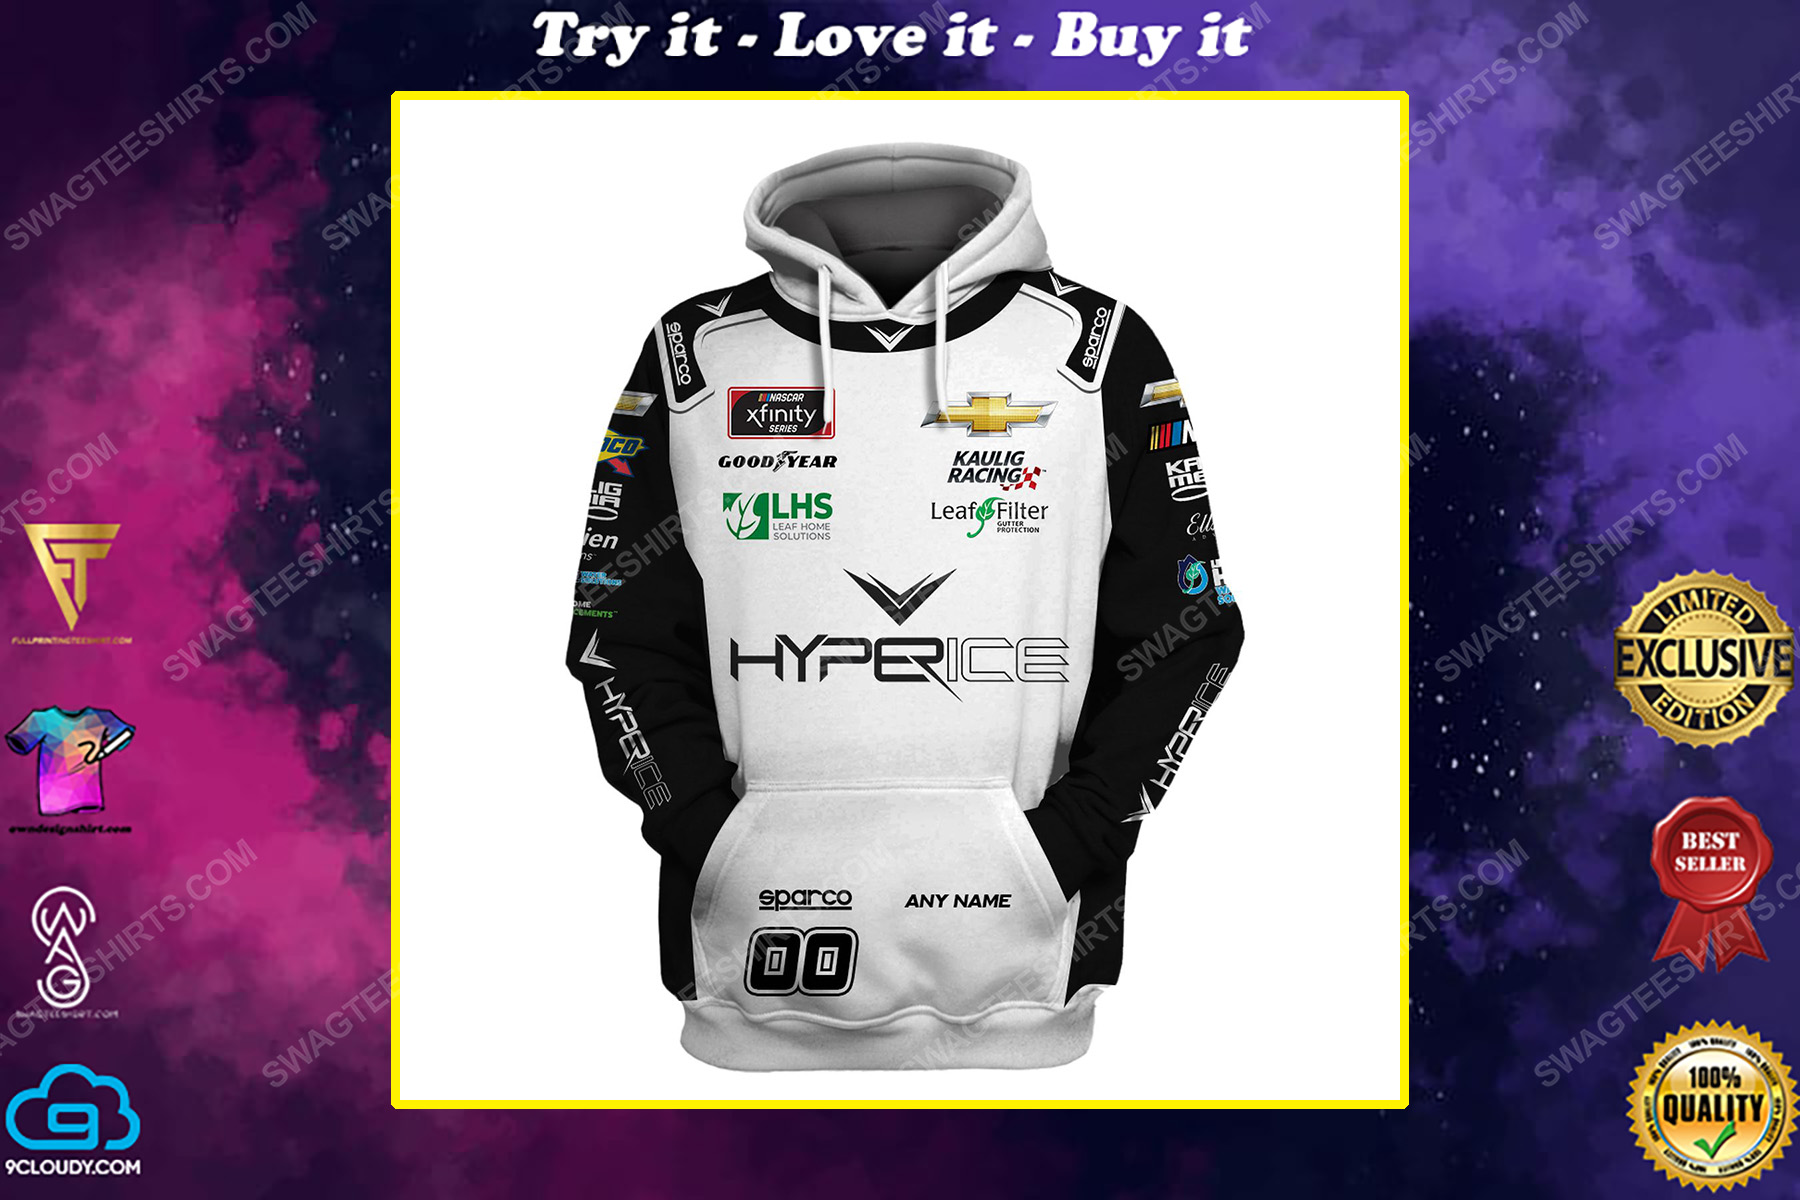 Custom hyperice racing team motorsport full printing shirt